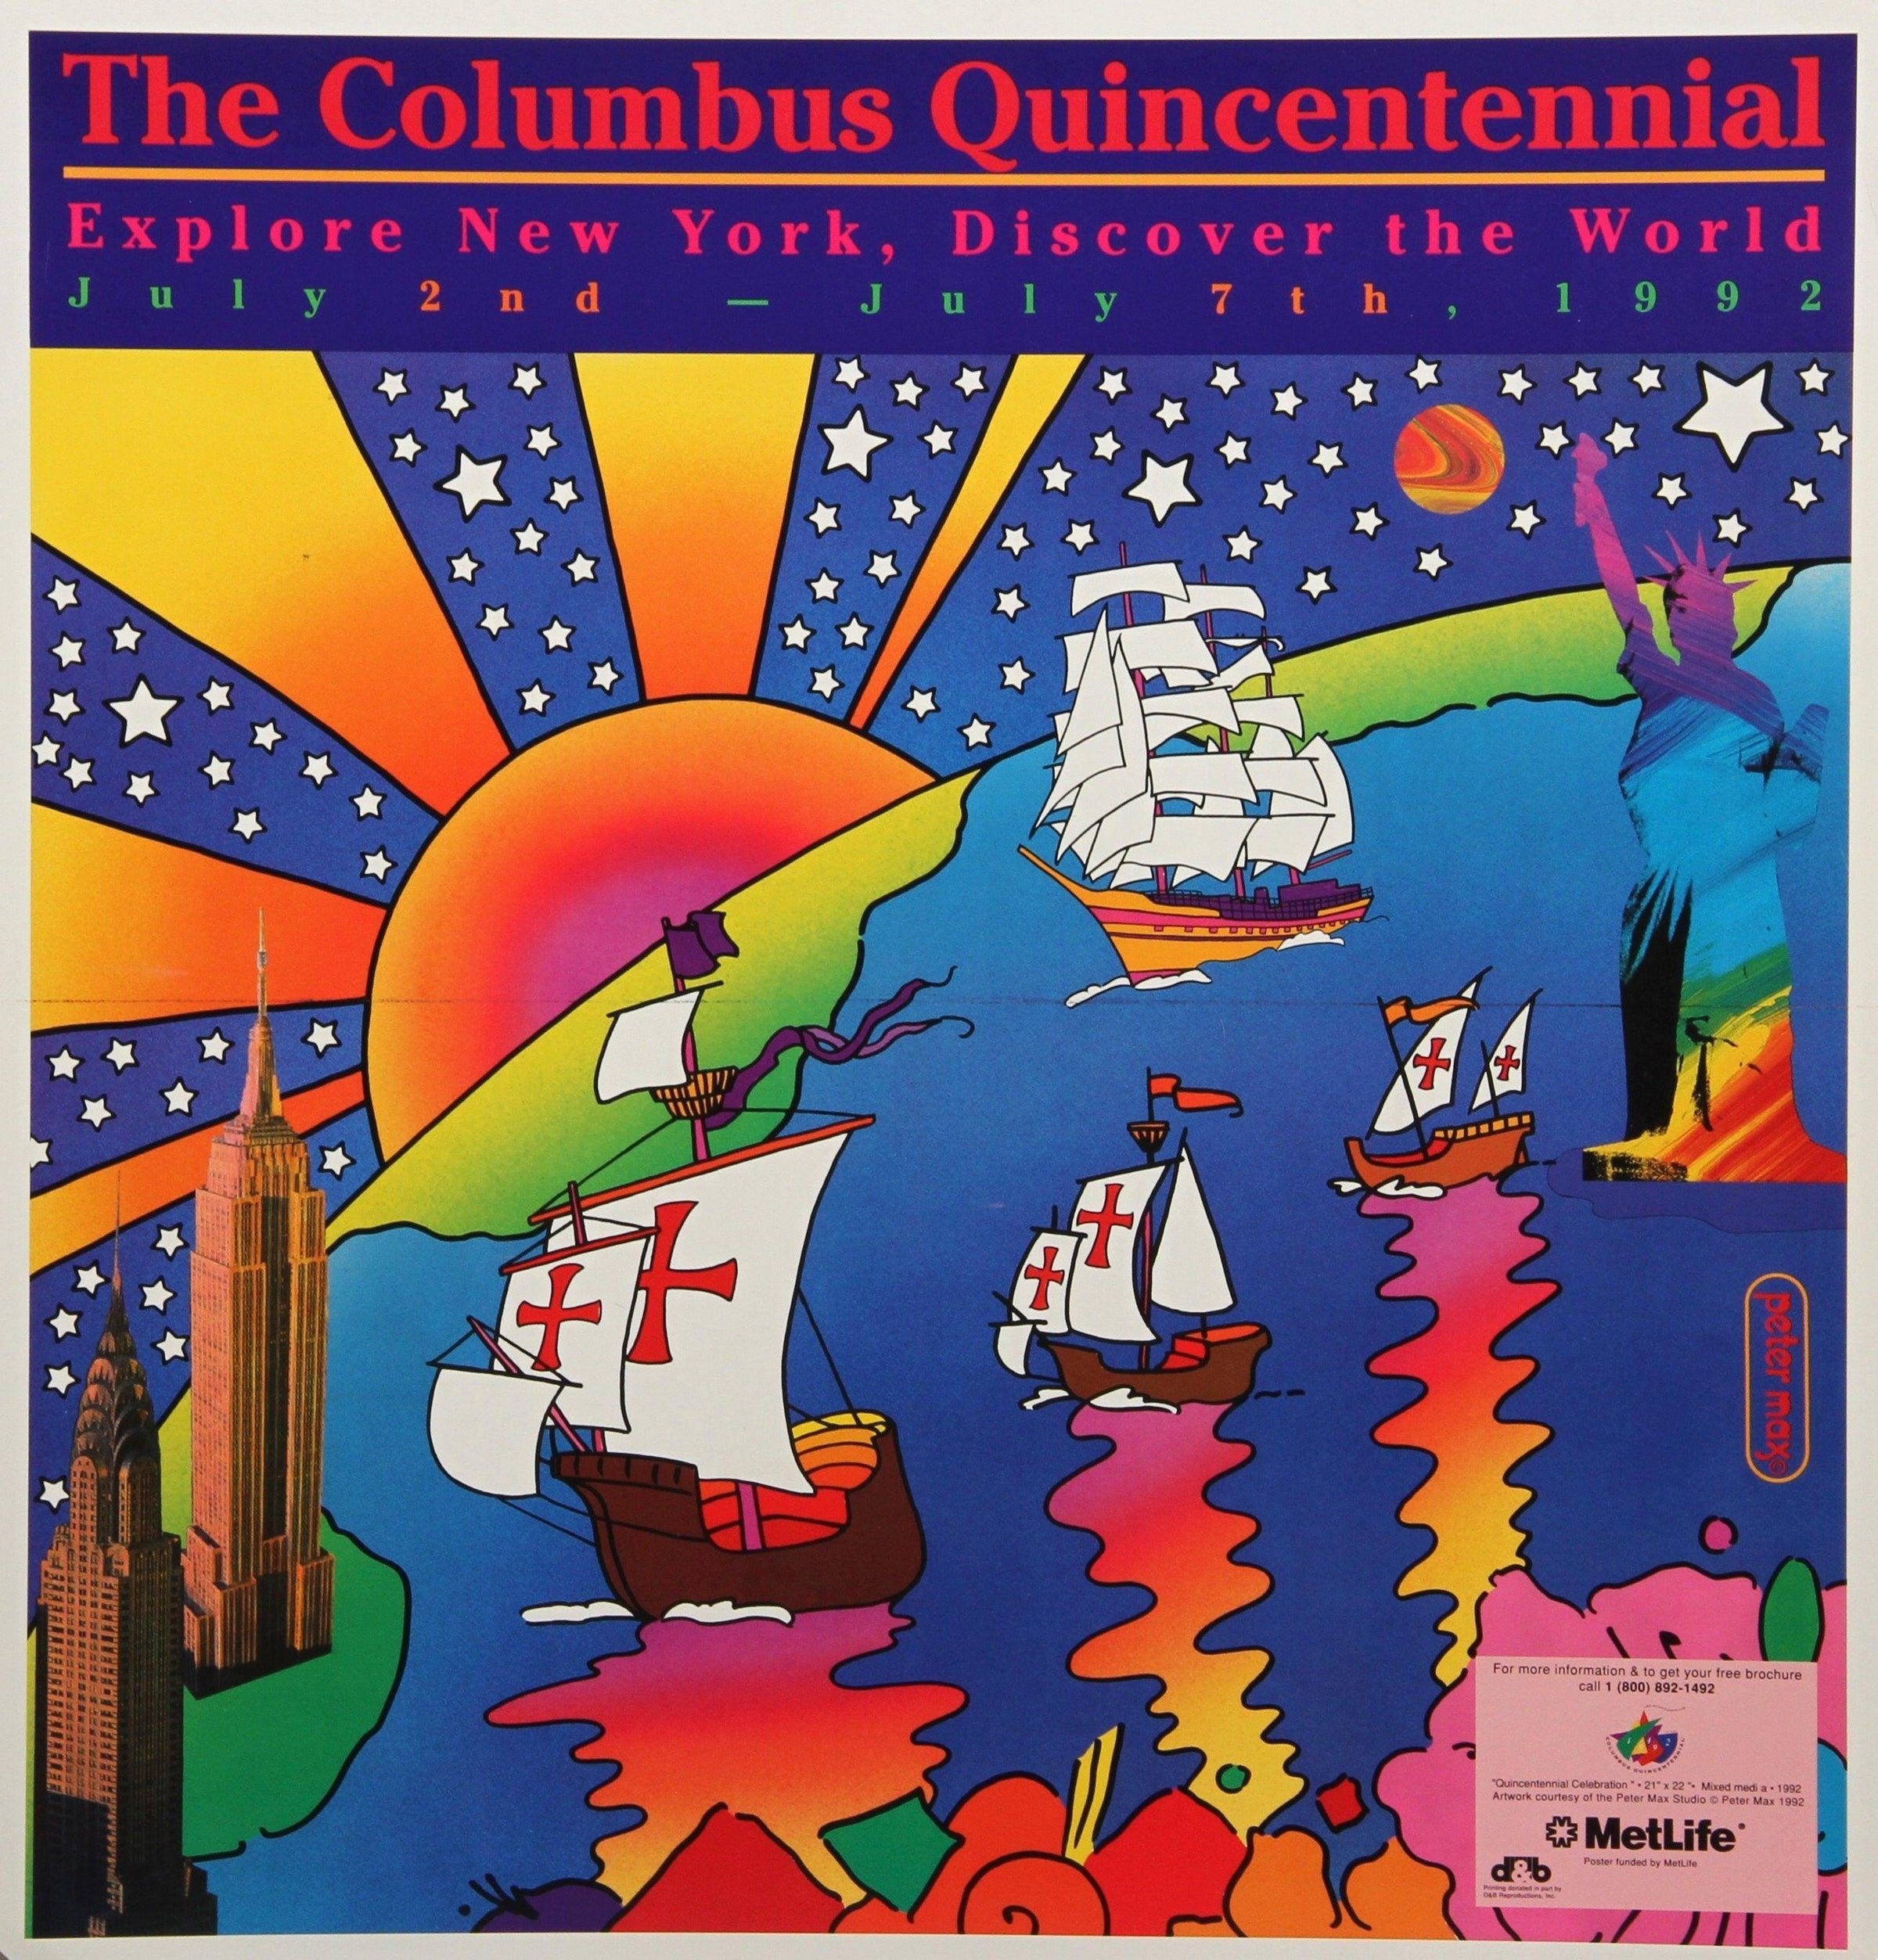 The Columbus Quincentennial